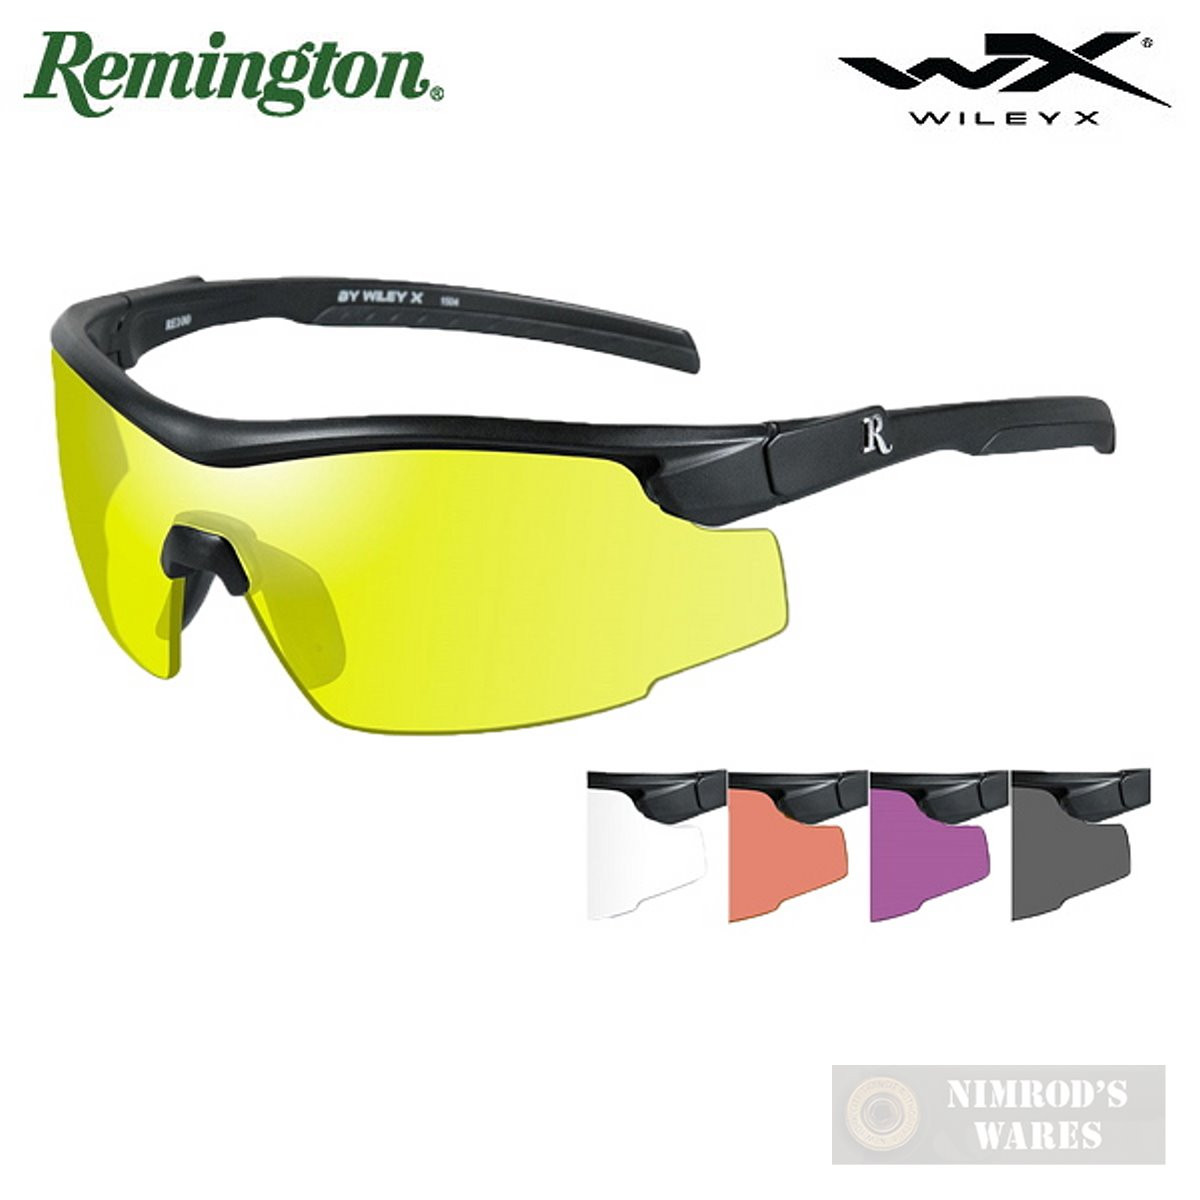 Nimrods Wares Remington Wiley X Shooting Glasses Ballistic 5 Lenses Adult RE105 Bundle Microfiber Cloth